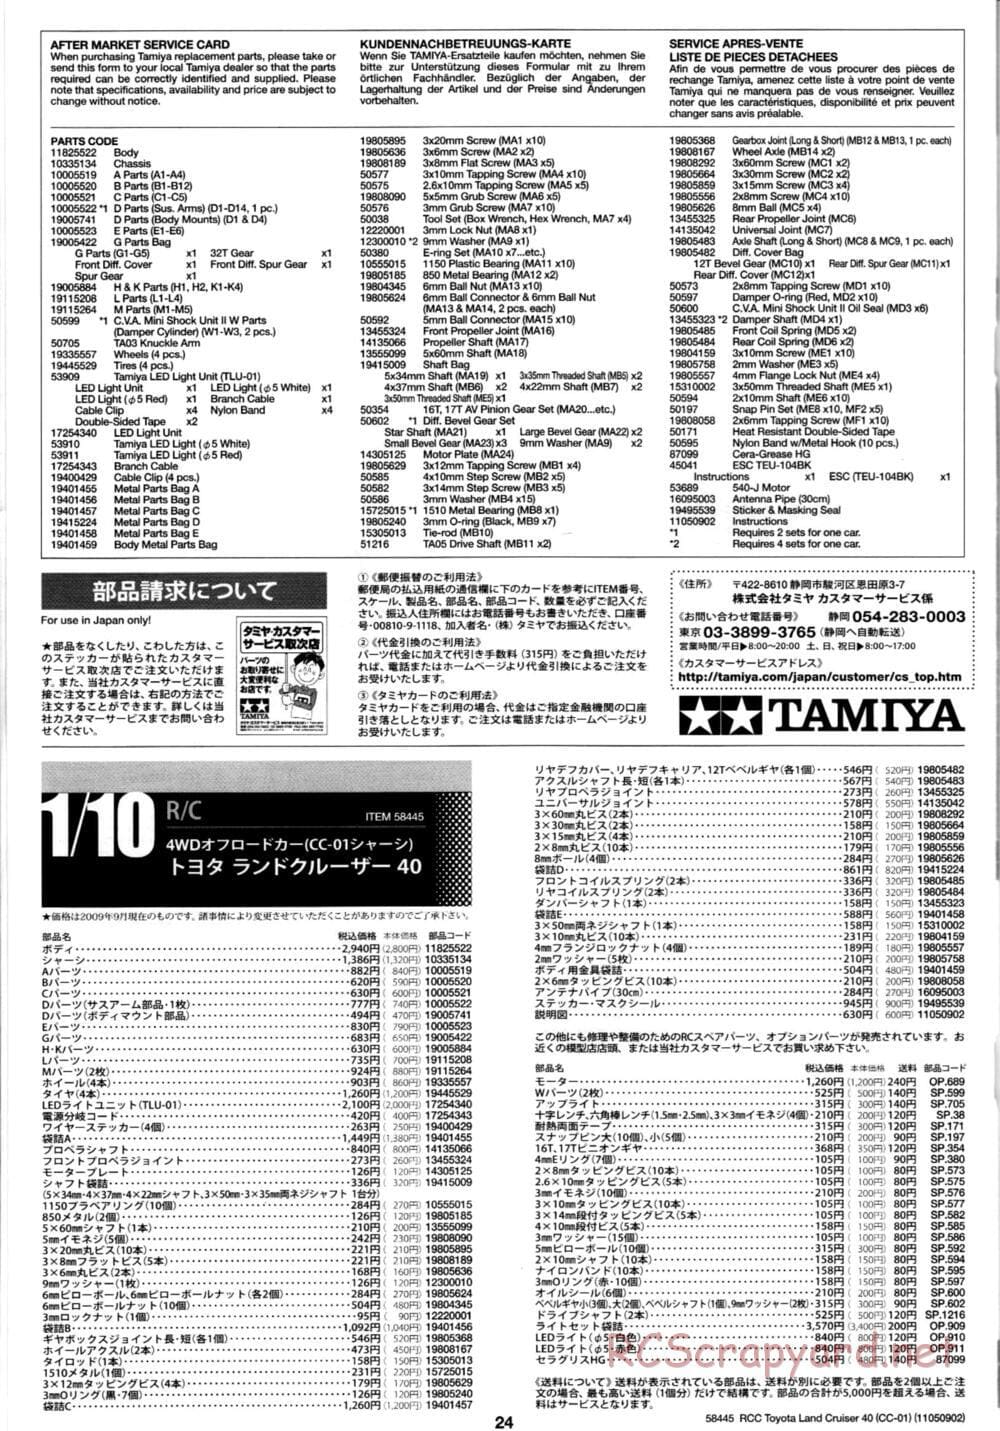 Tamiya - Toyota Land Cruiser 40 - CC-01 Chassis - Manual - Page 24